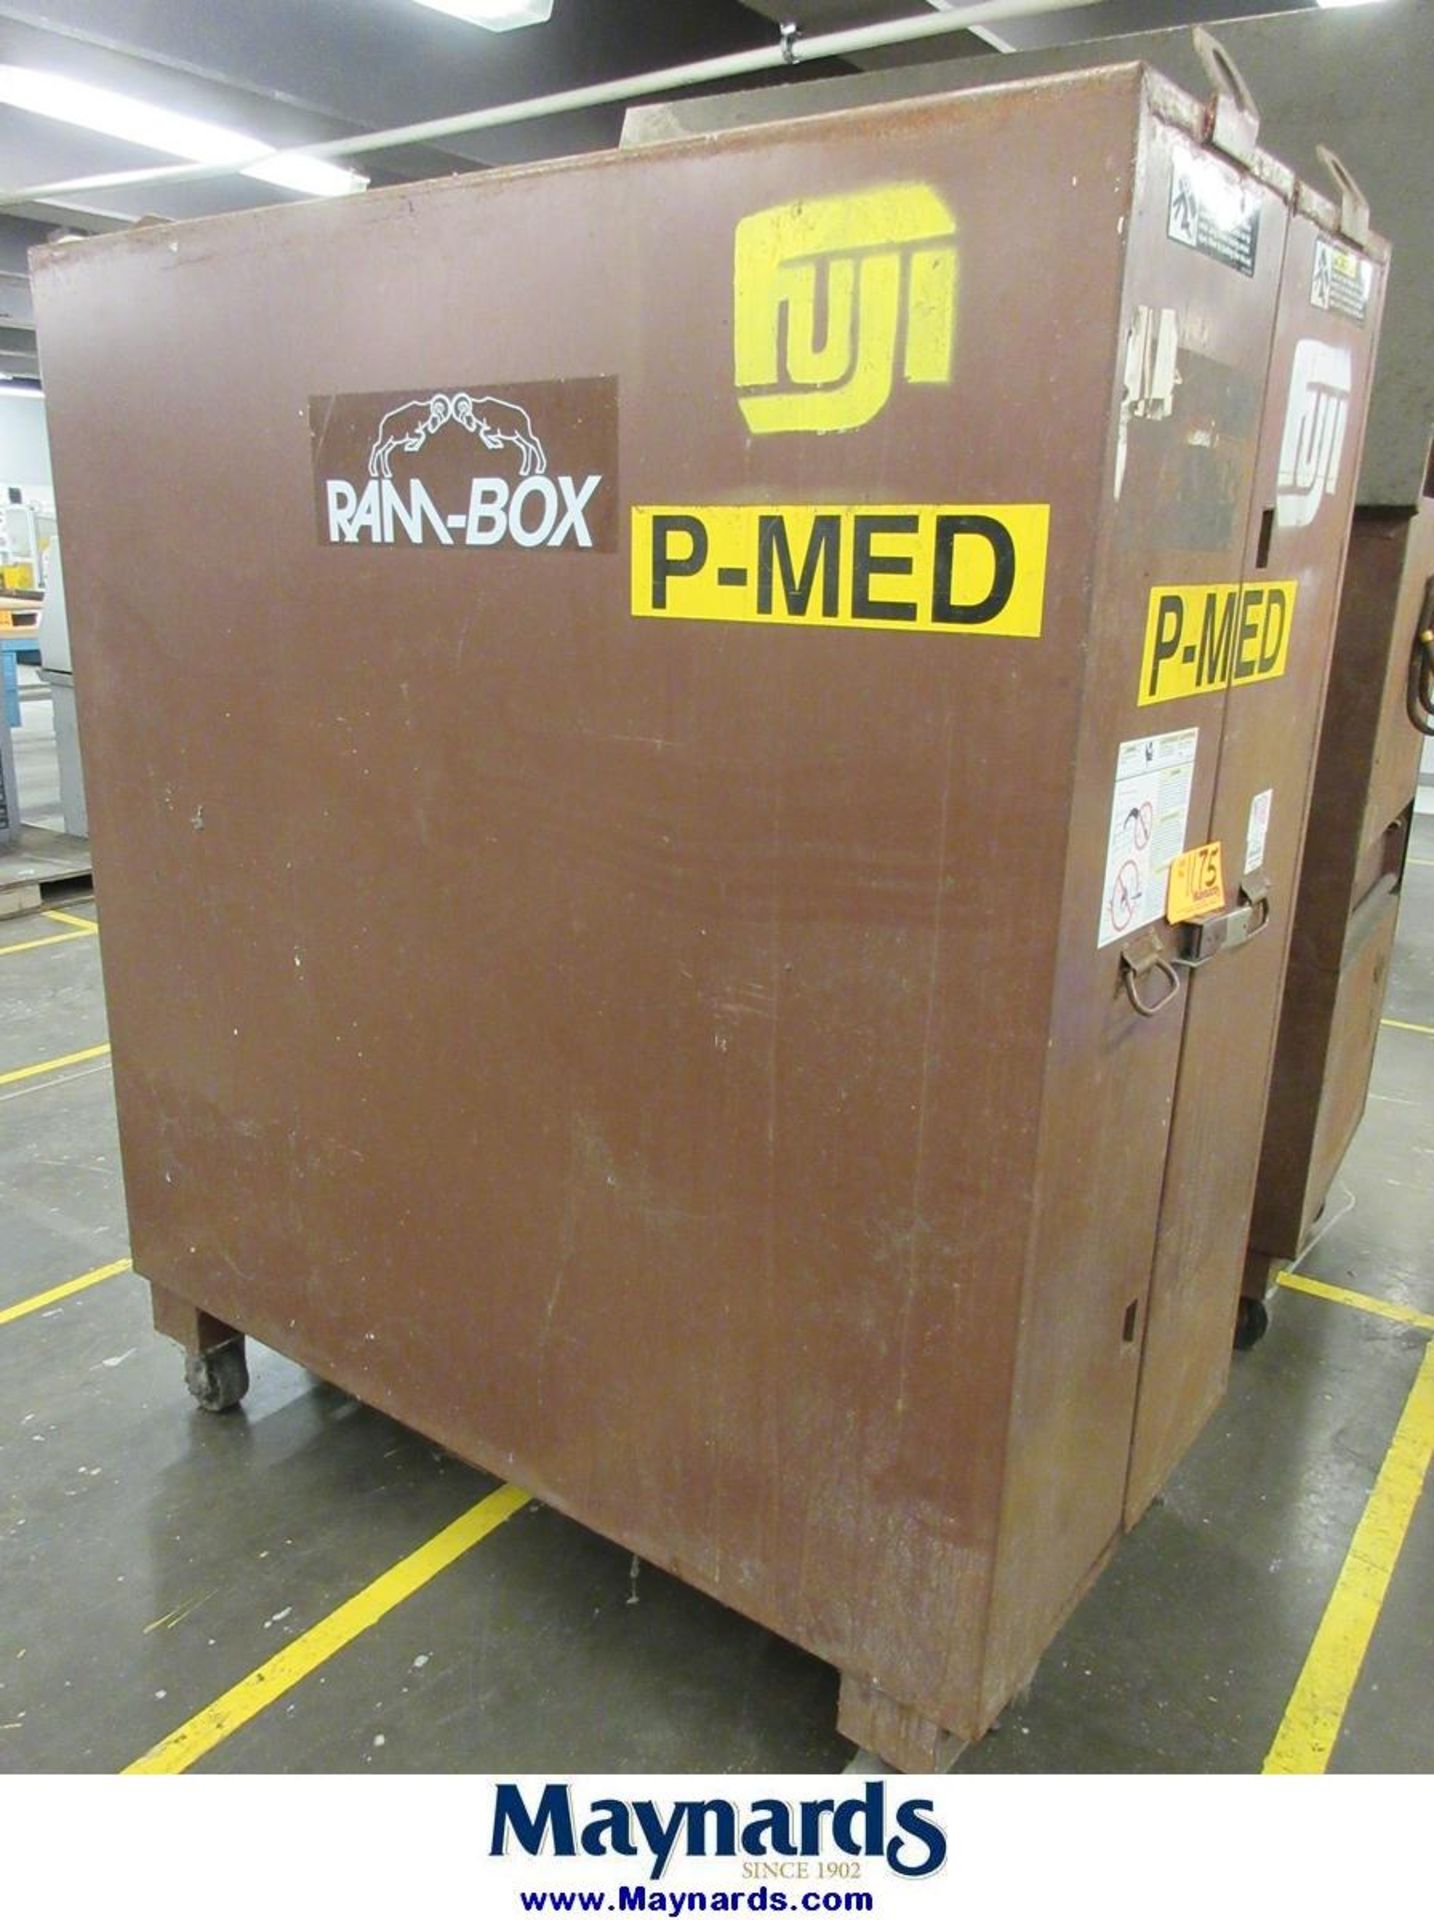 Ram-Box 606058 Heavy Duty Tool Storage Box